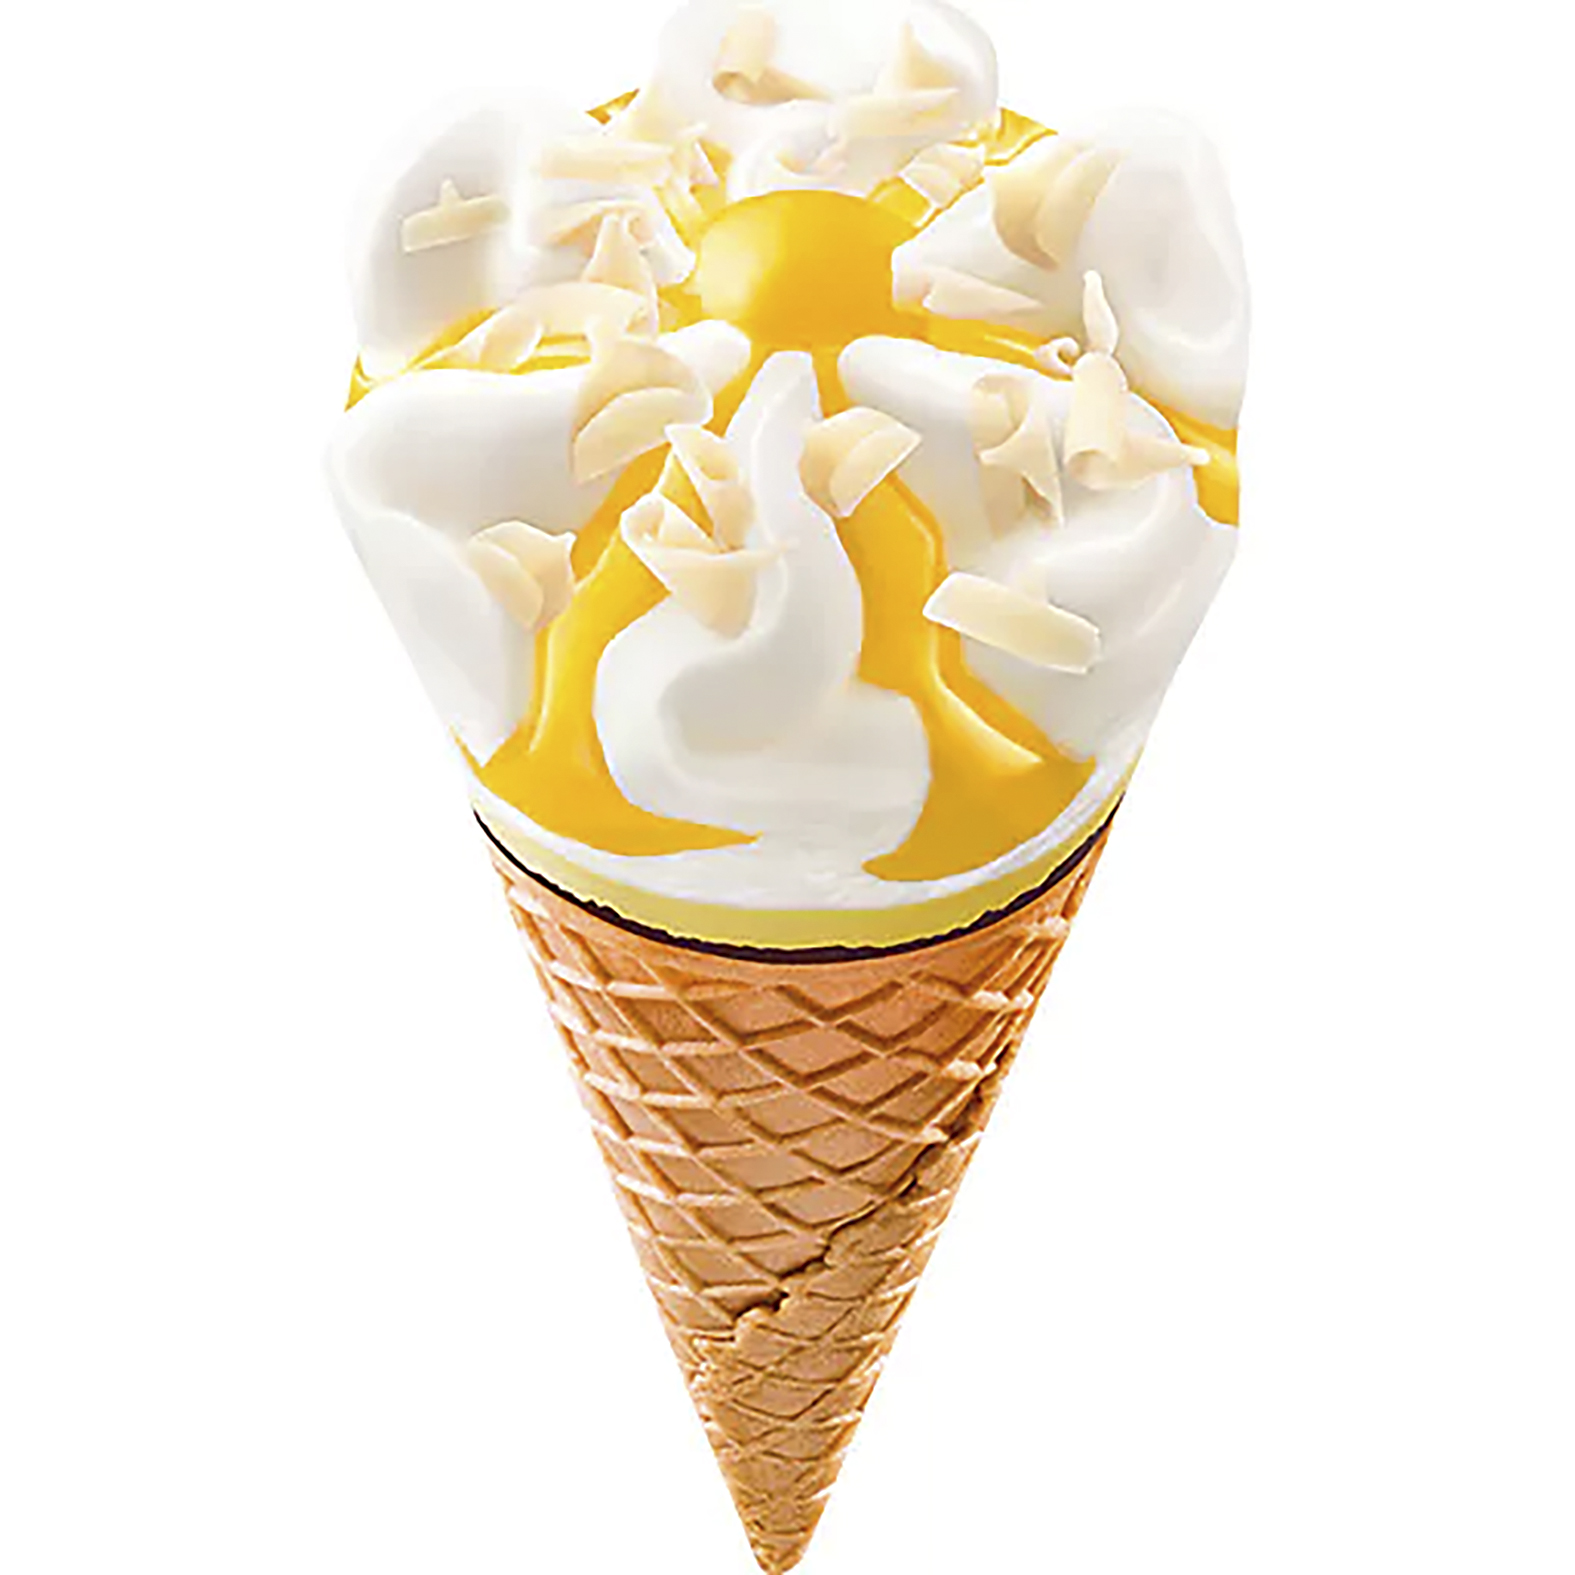 En strut med gul och vit glass. Cornetto citron. 